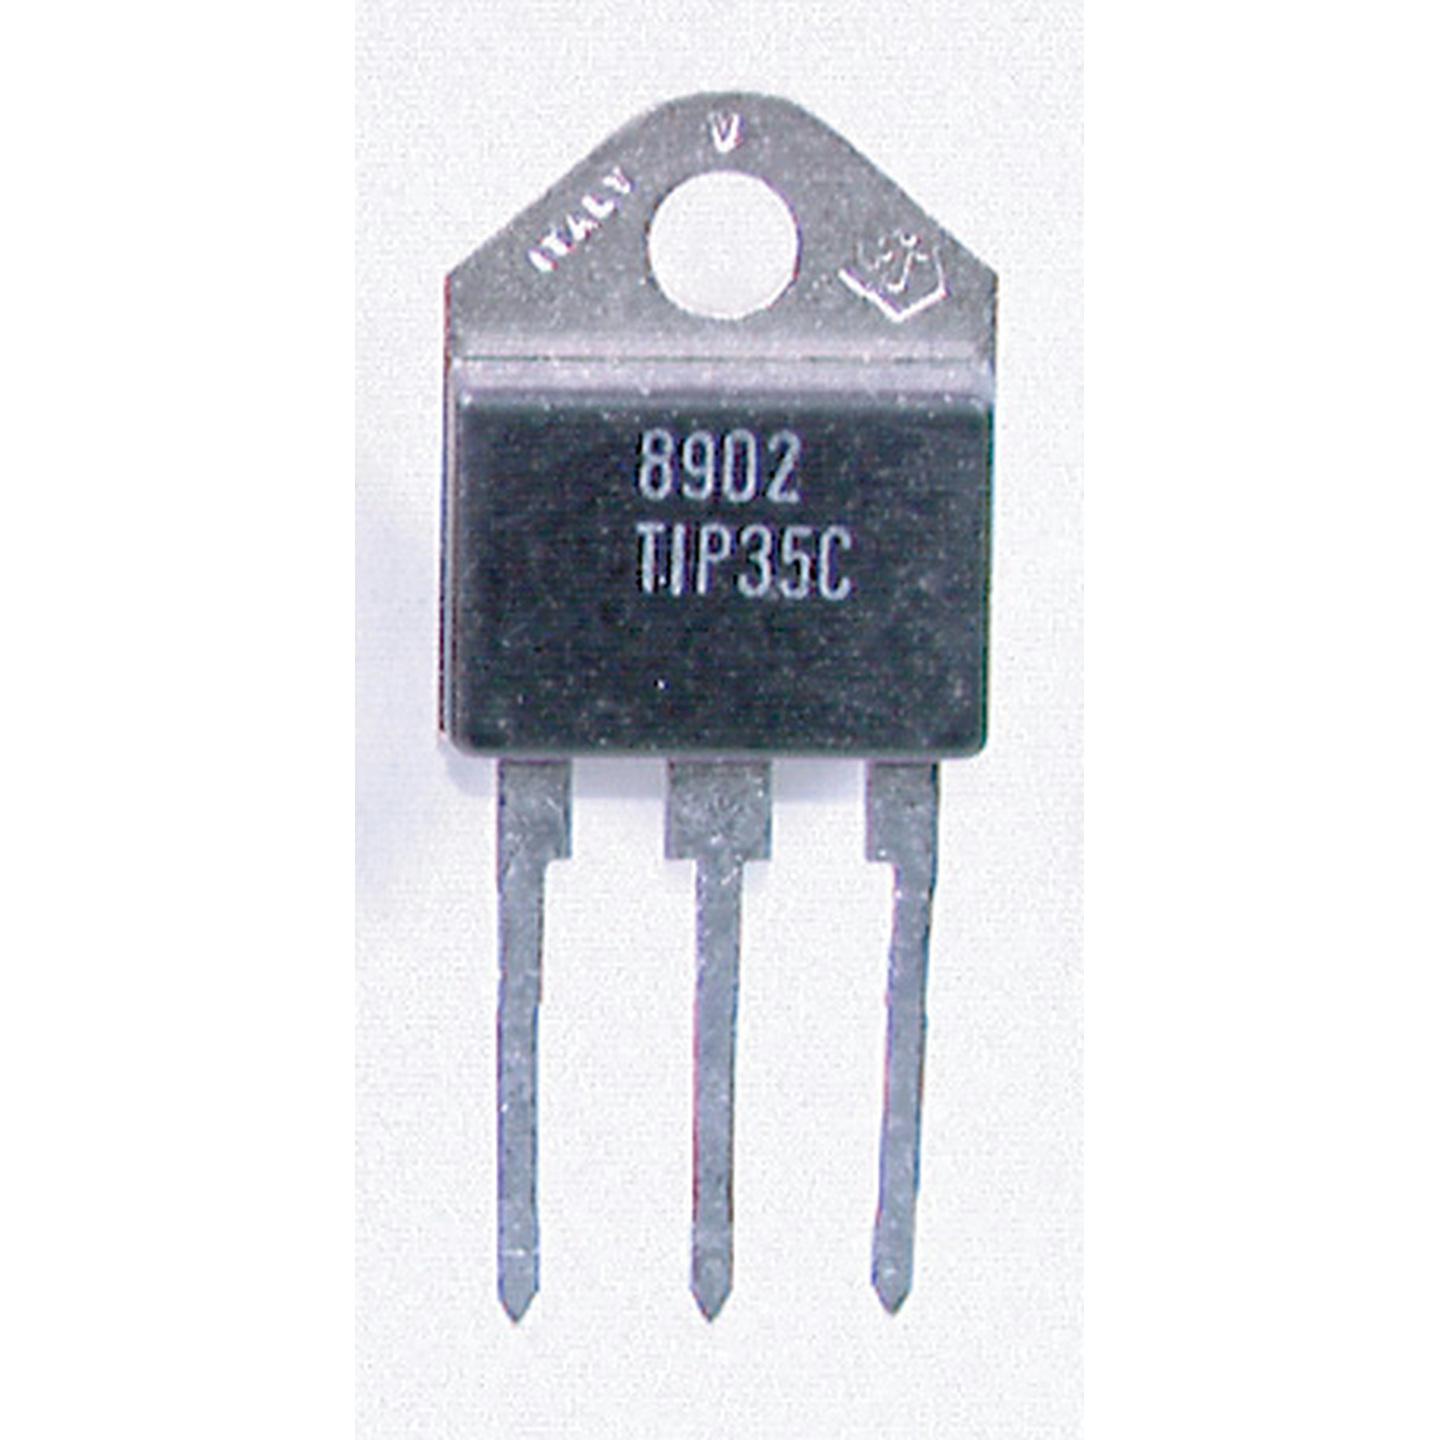 TIP36C PNP Transistor